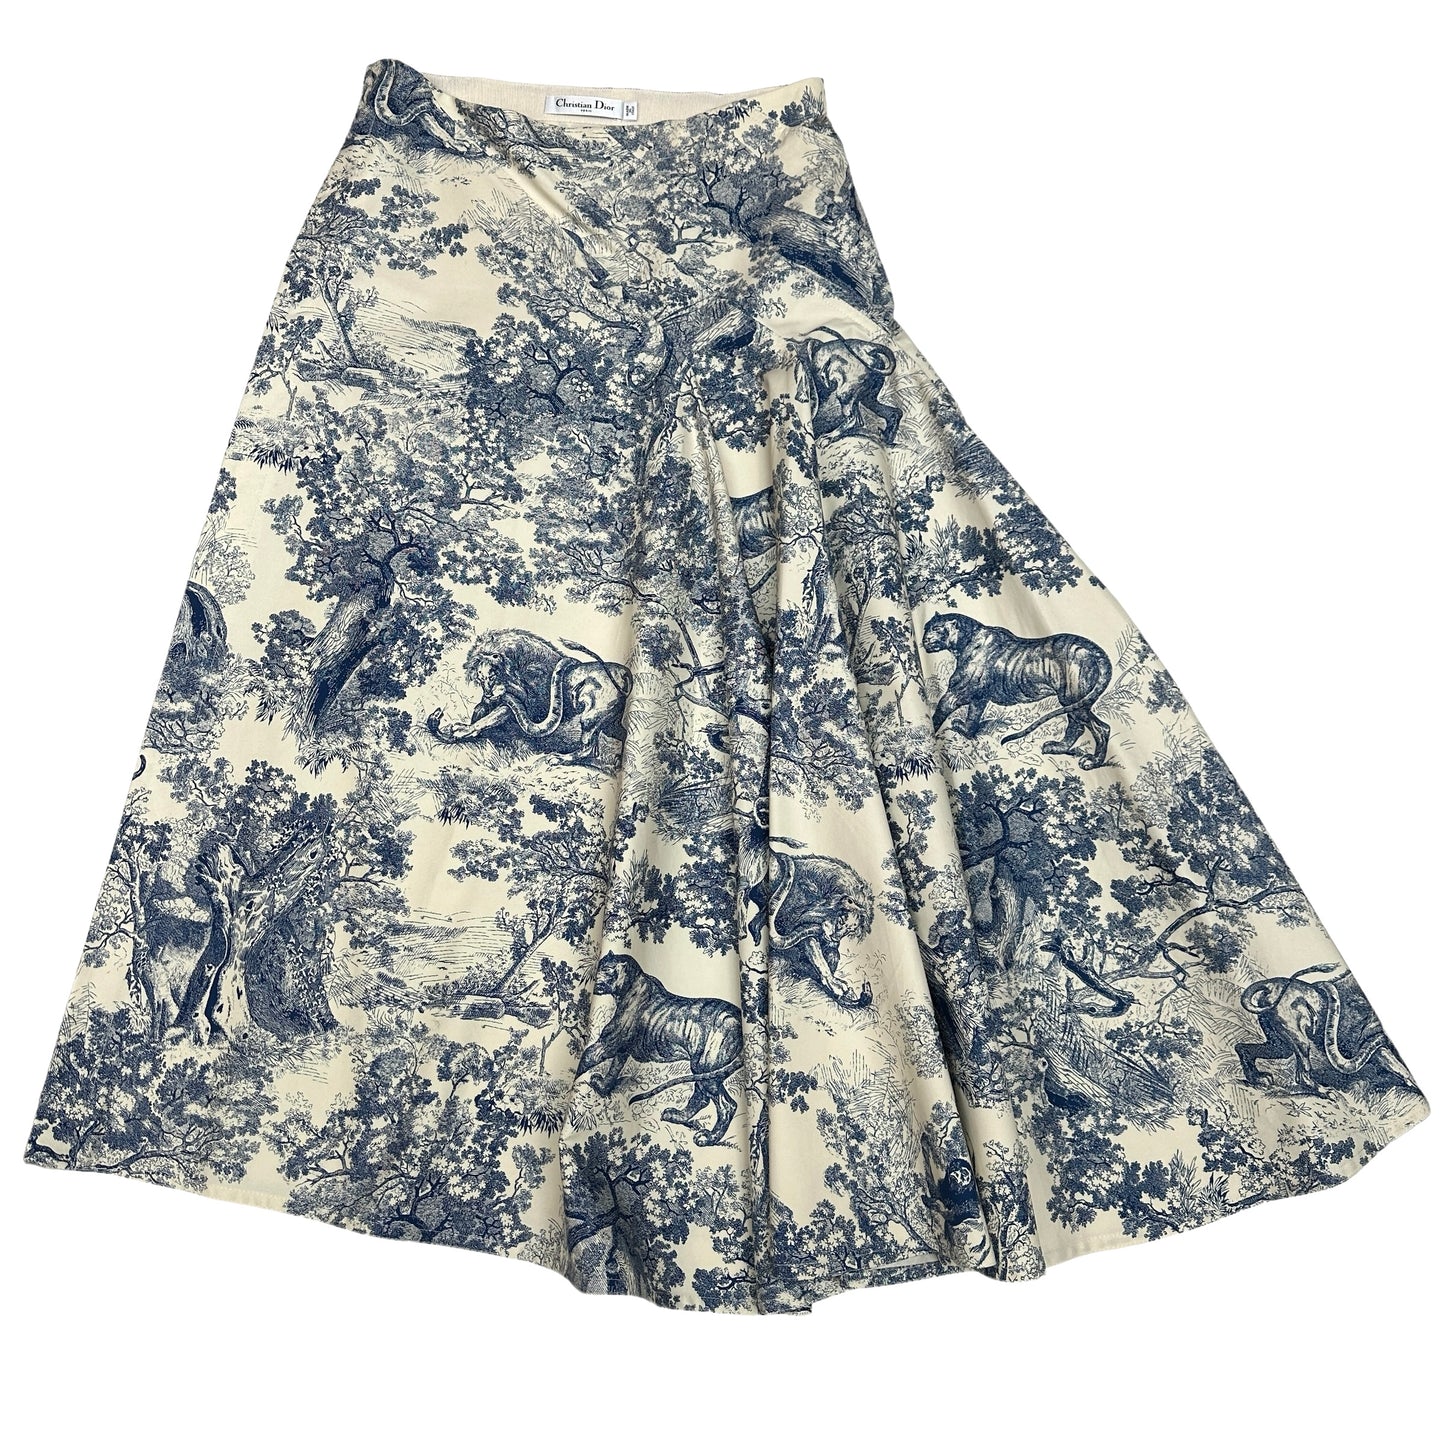 Toile De Jouy Printed Skirt - US 8